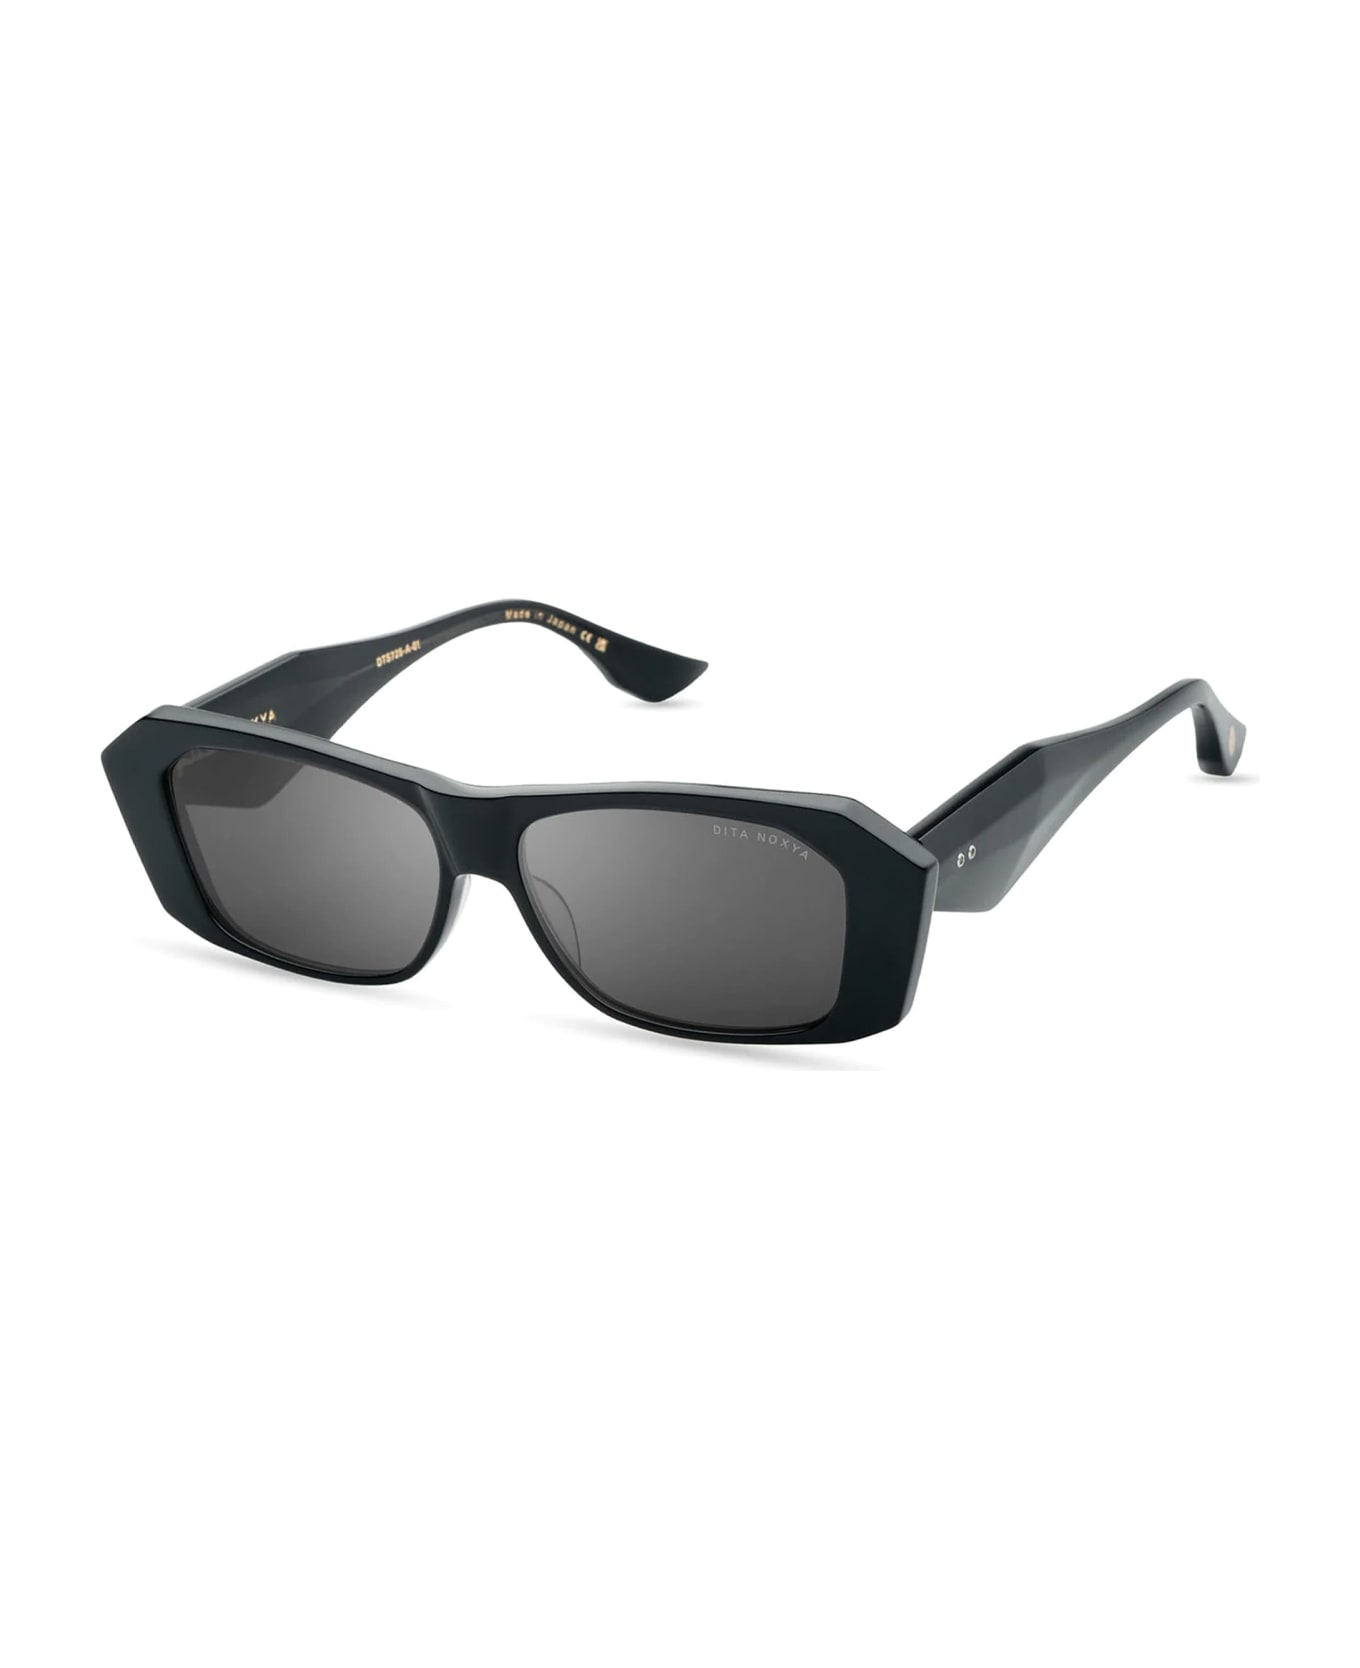 Dita Noxya - Black Sunglasses - Black